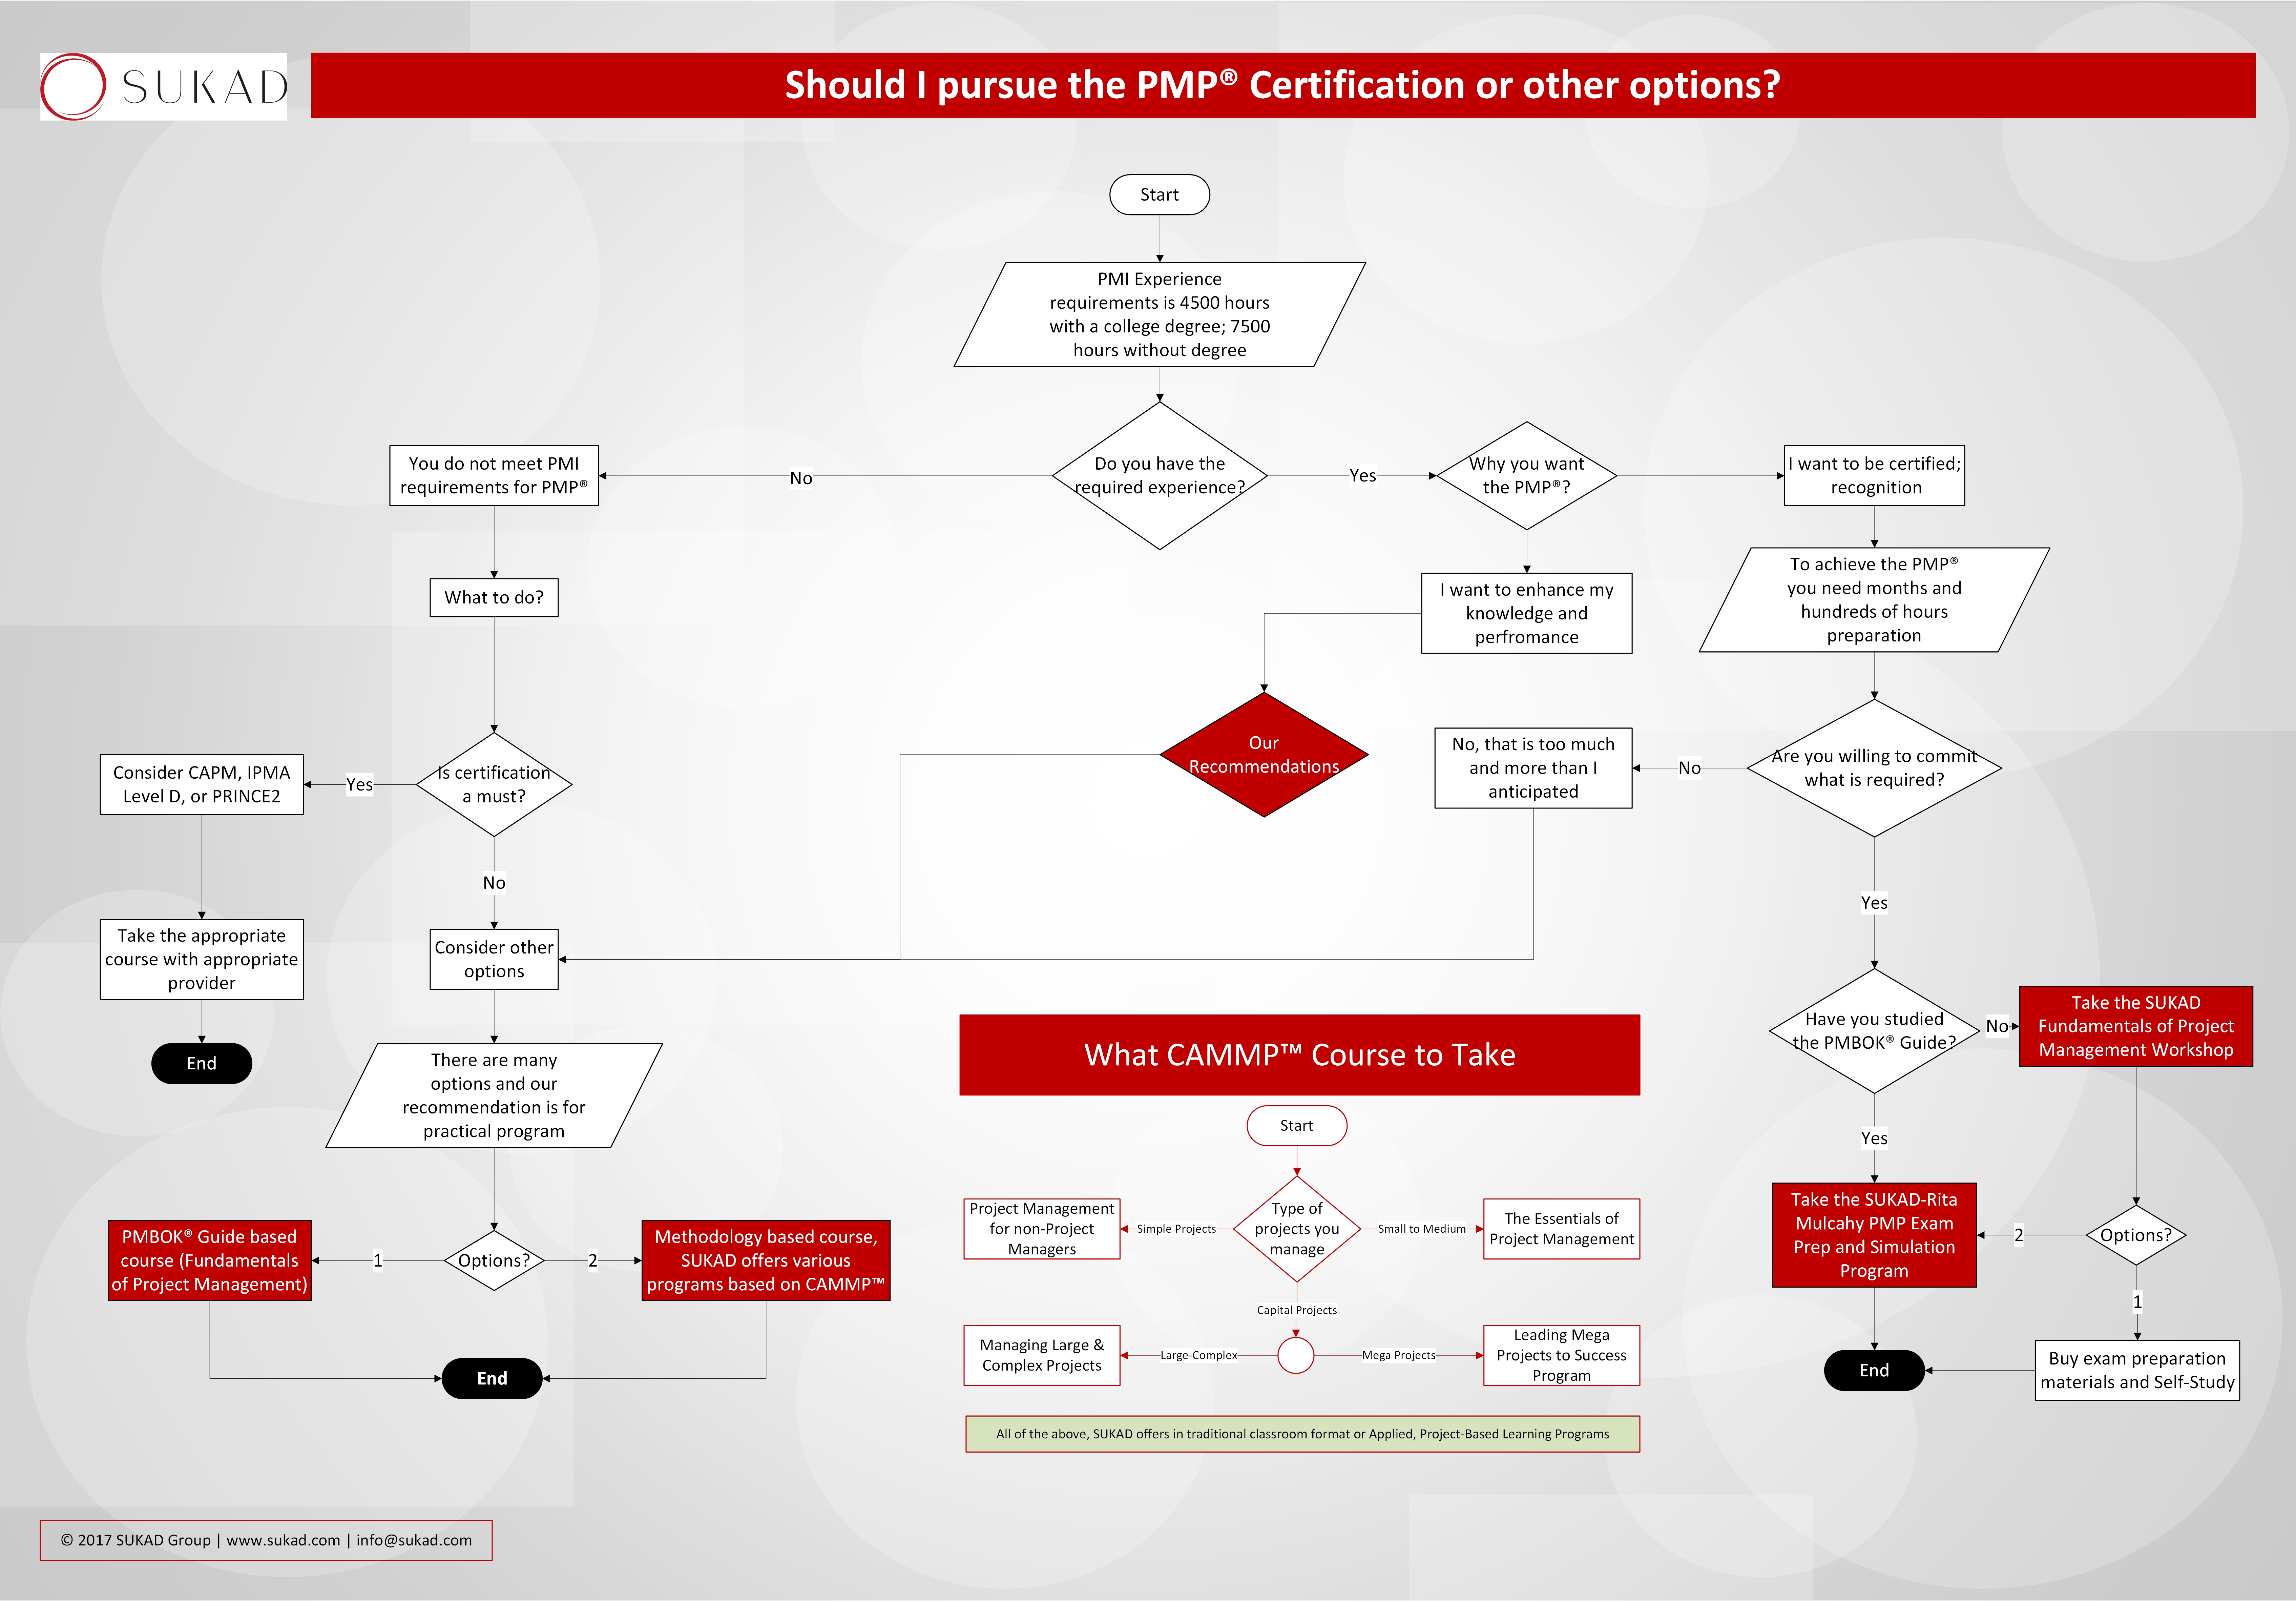 Should I pursue a PMP certification or consider alternatives?